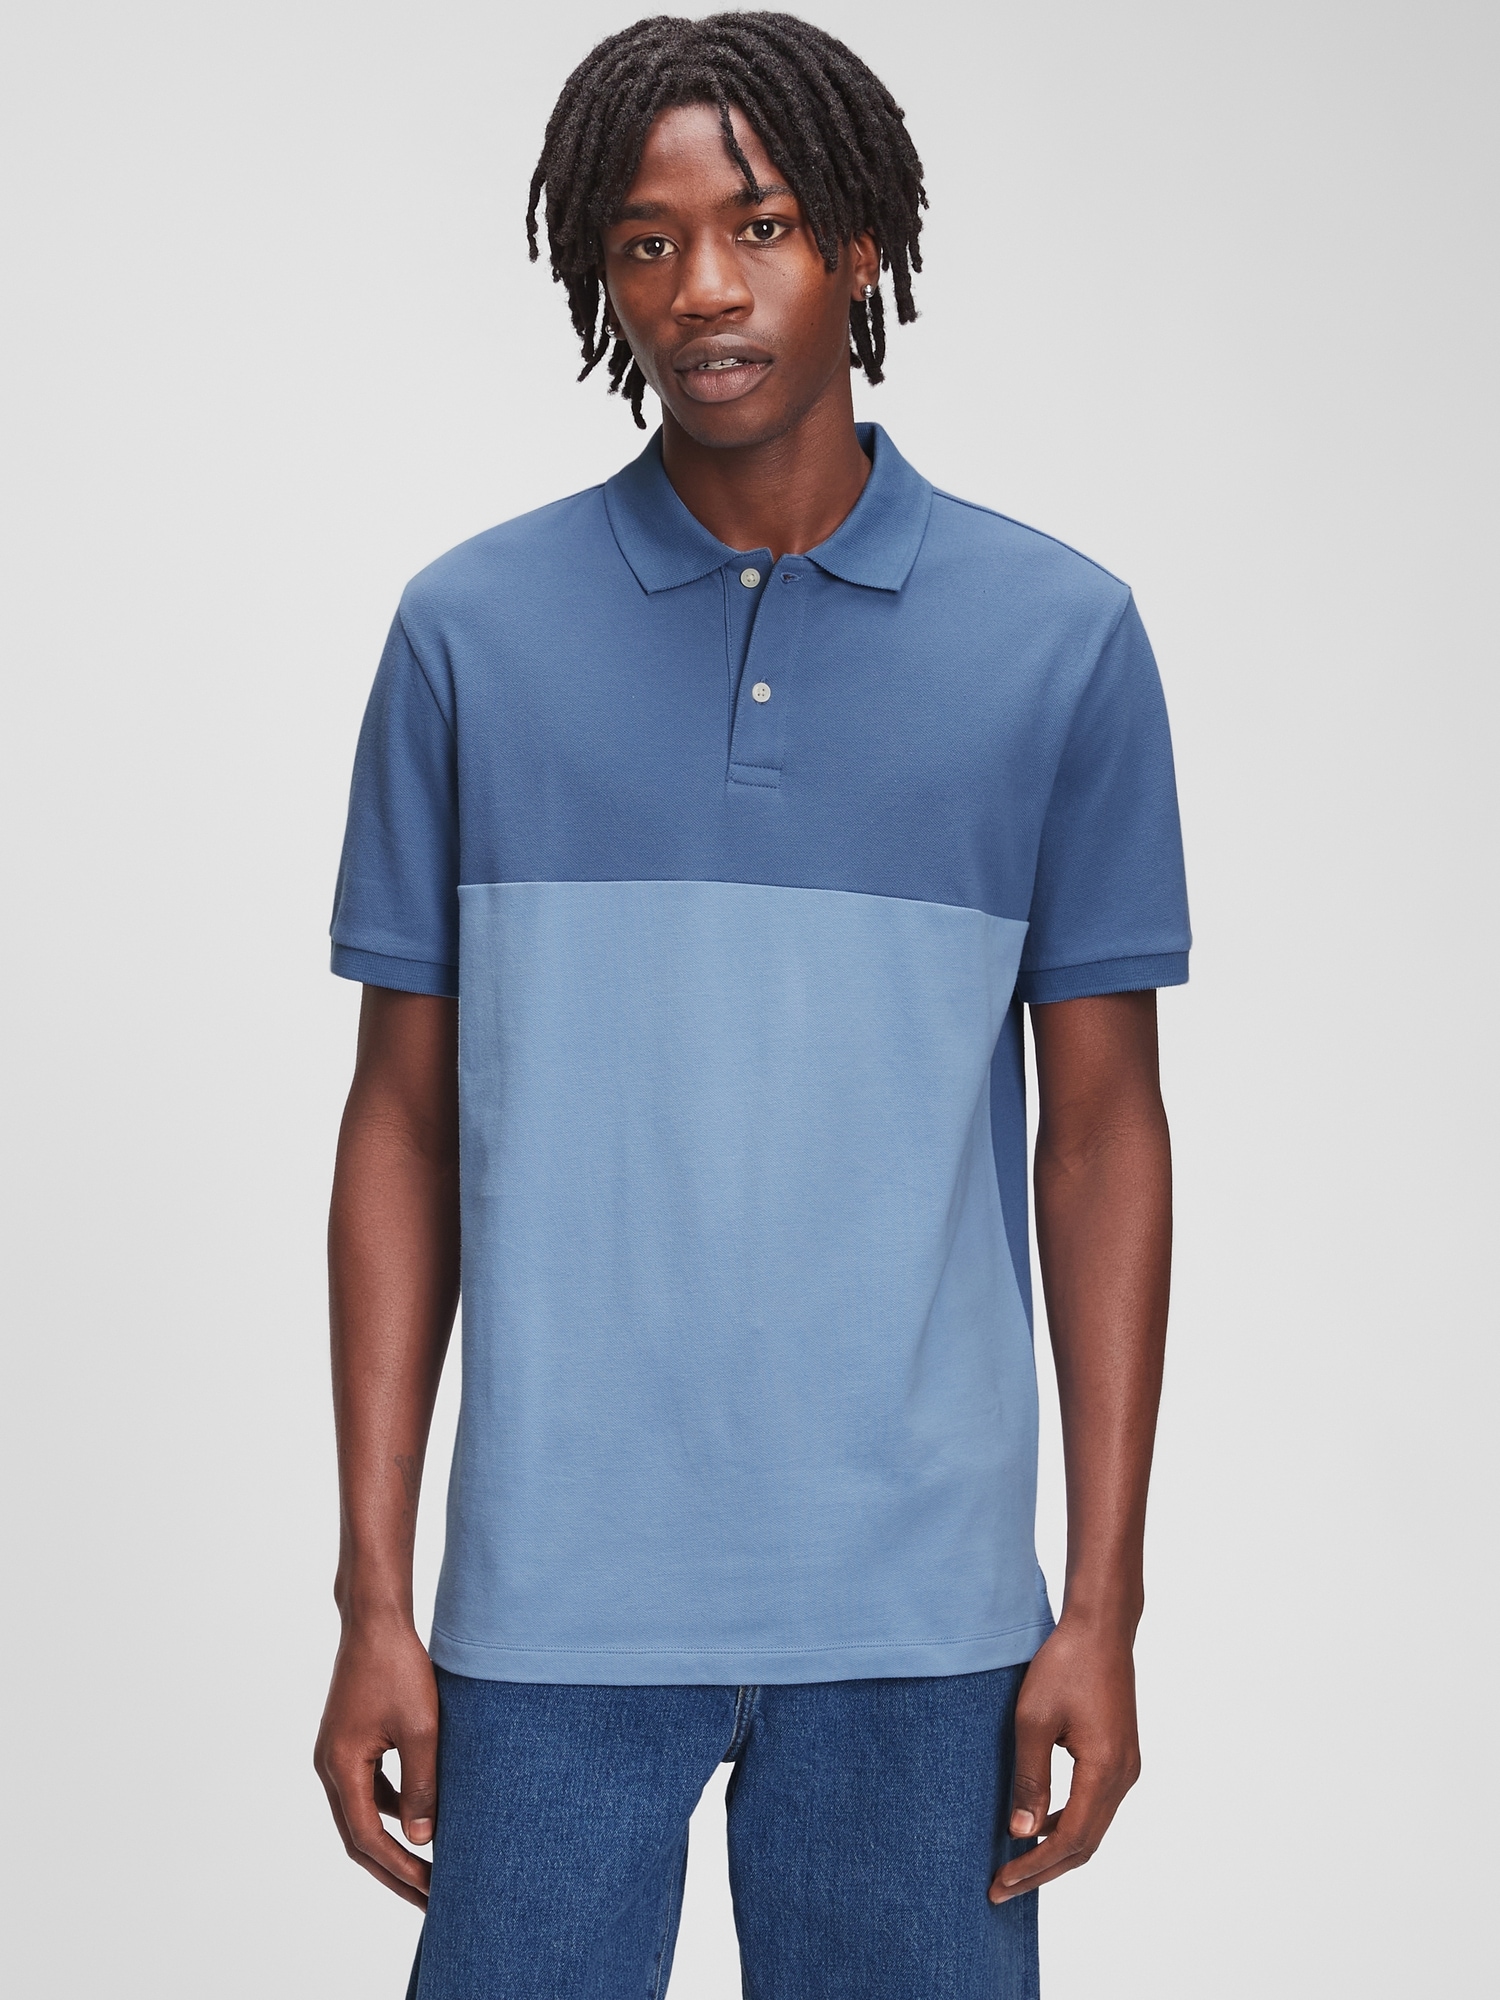 Colorblock Stretch Pique Polo Shirt | Gap Factory